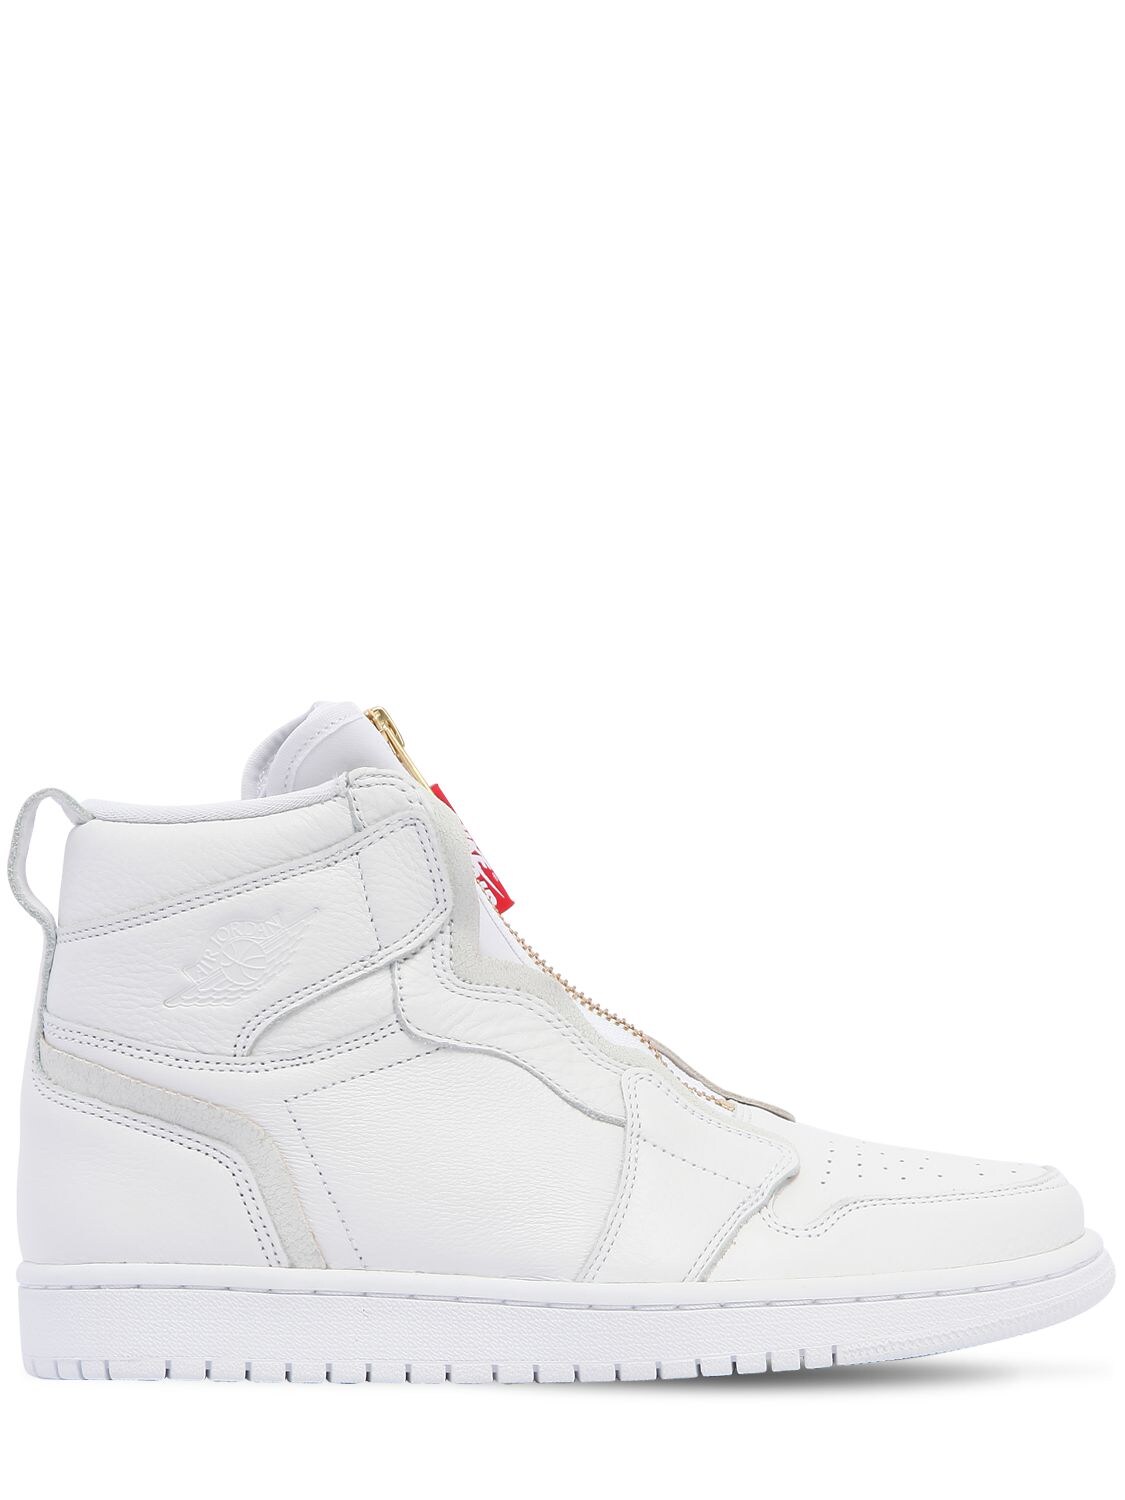 Nike Air Jordan 1 High Zip Trainers In White